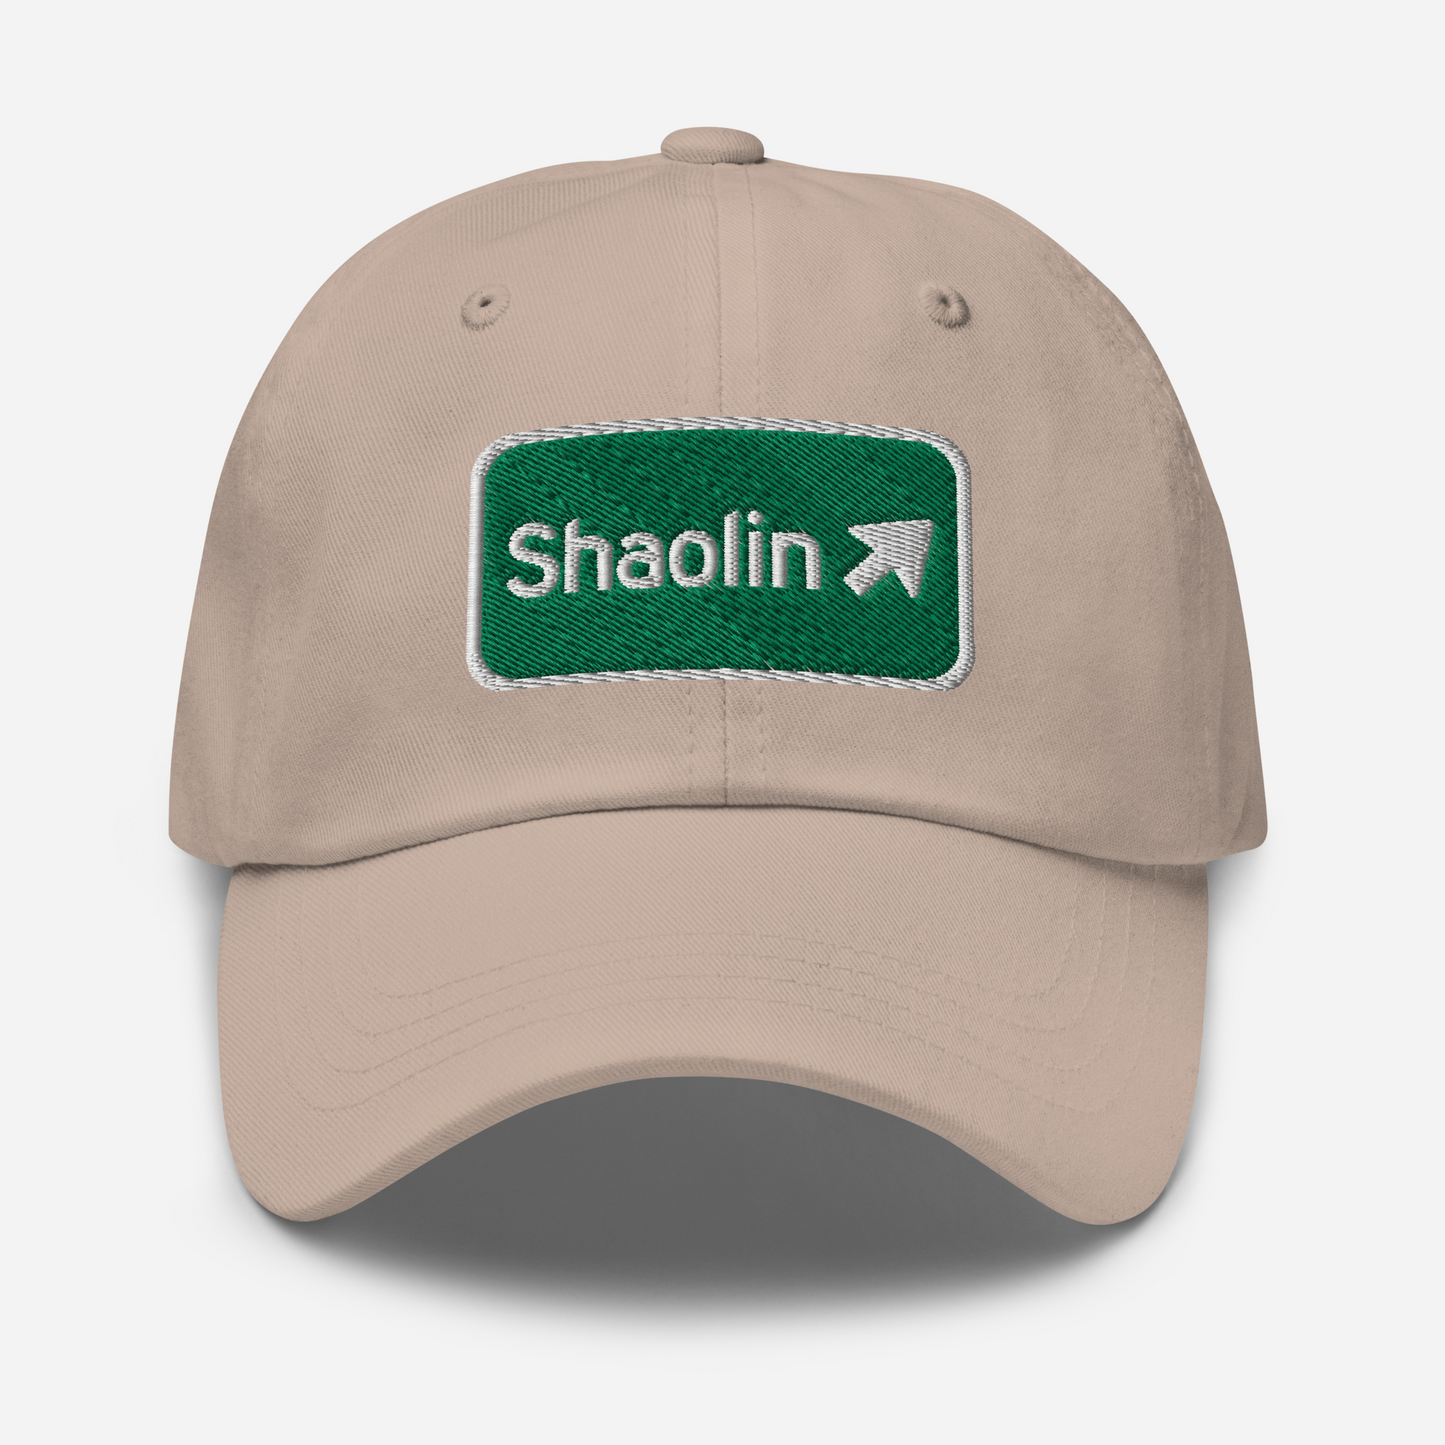 Shaolin sign dad hat